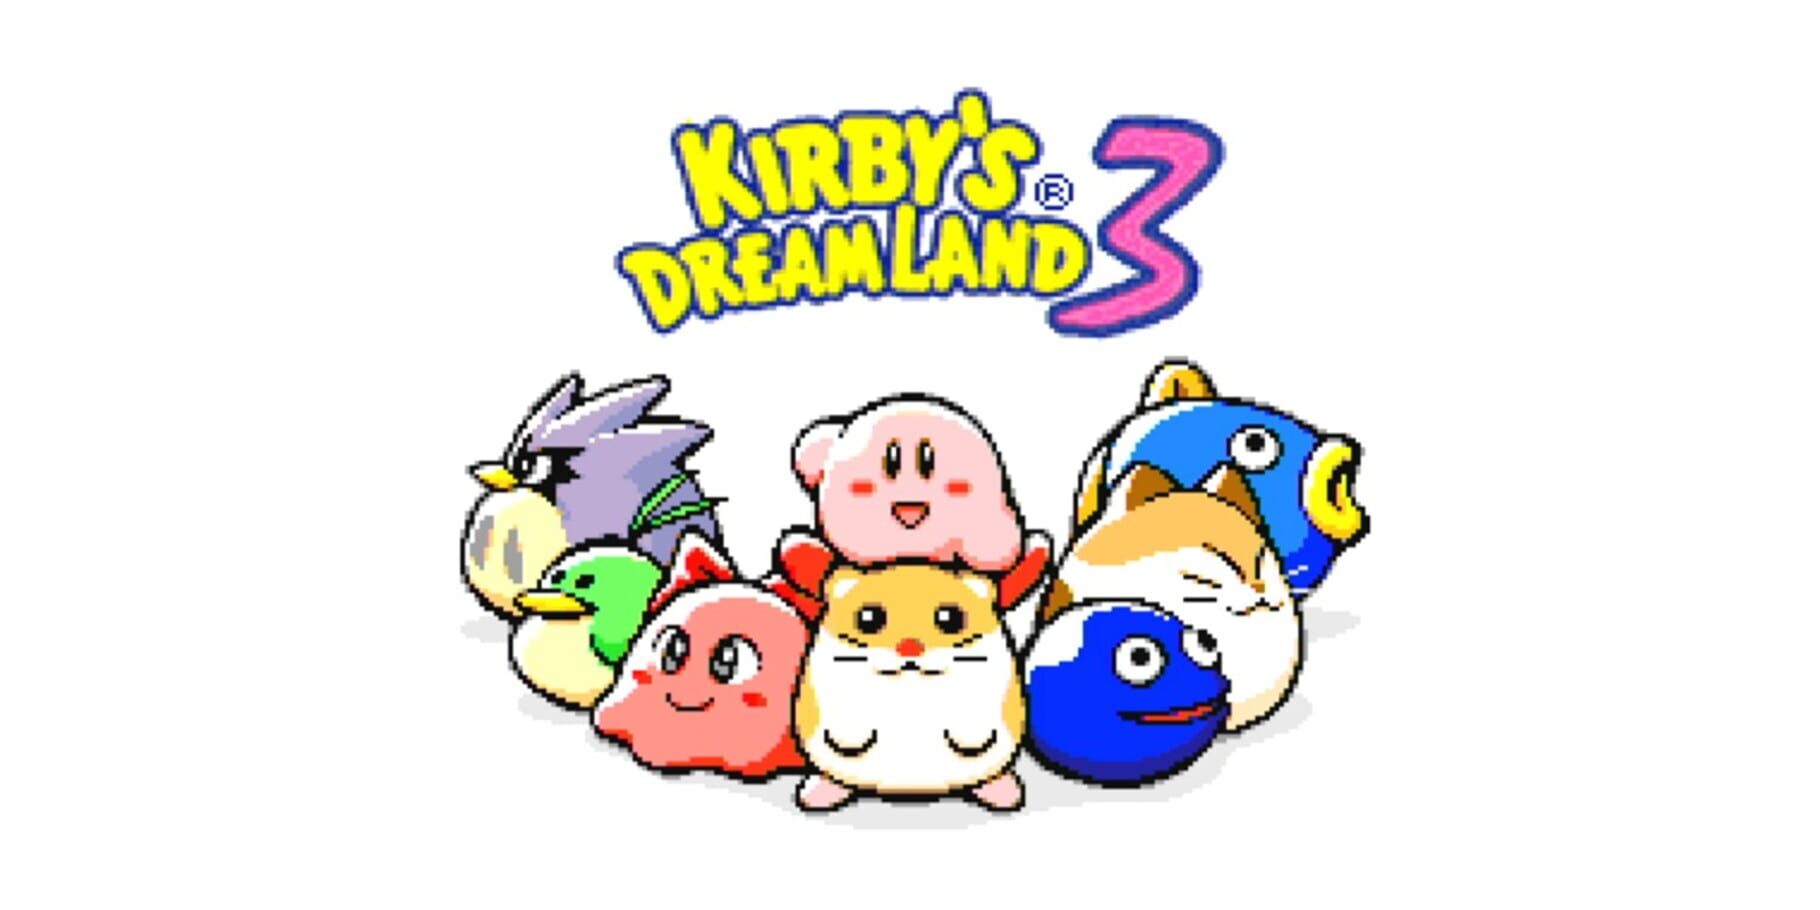 Arte - Kirby's Dream Land 3